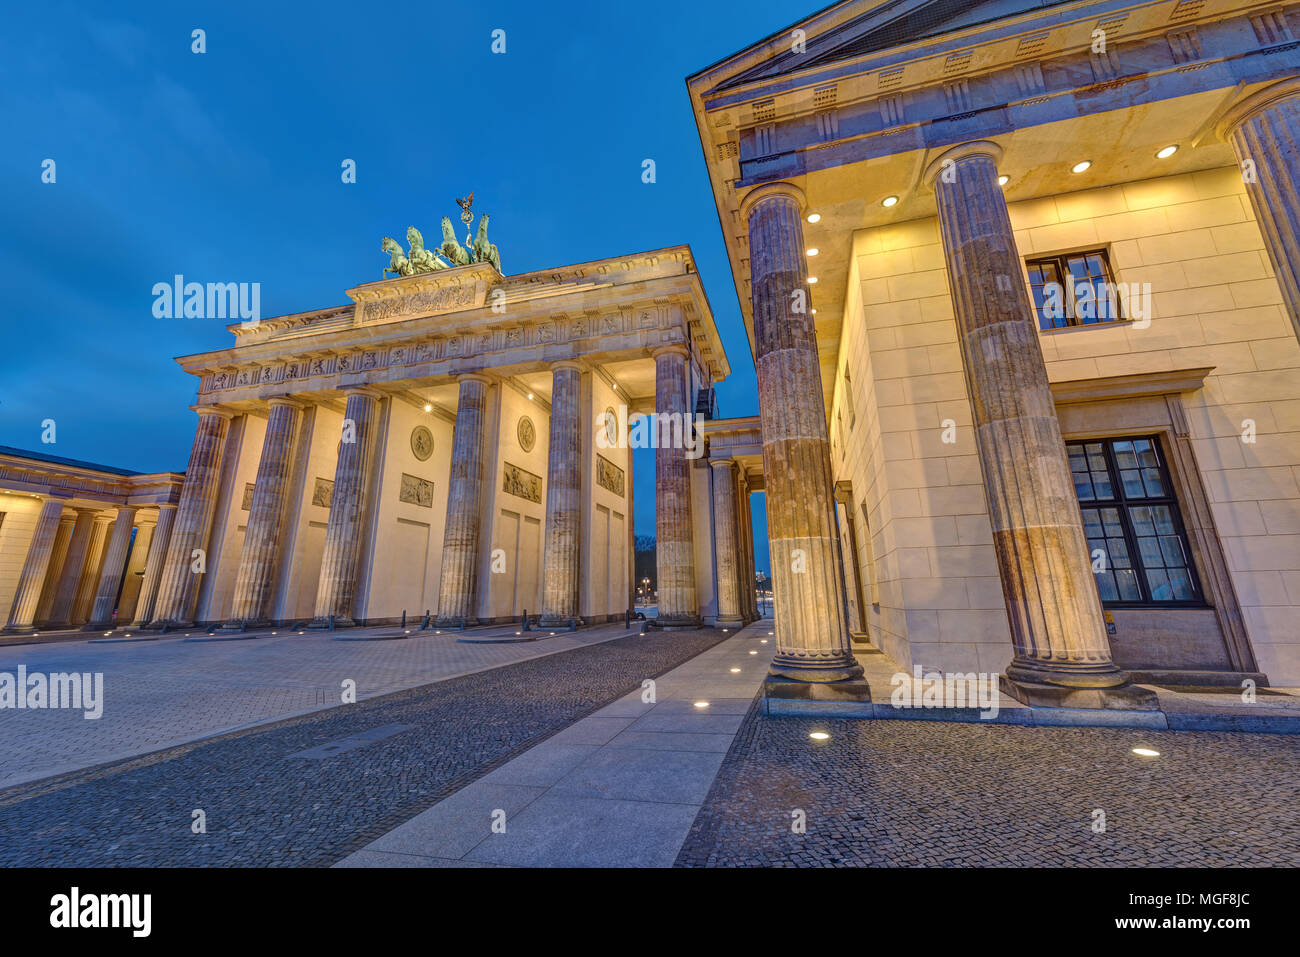 The famous illuminated Brandenburg Gate in Berlin, Germany, at night Stock Photo